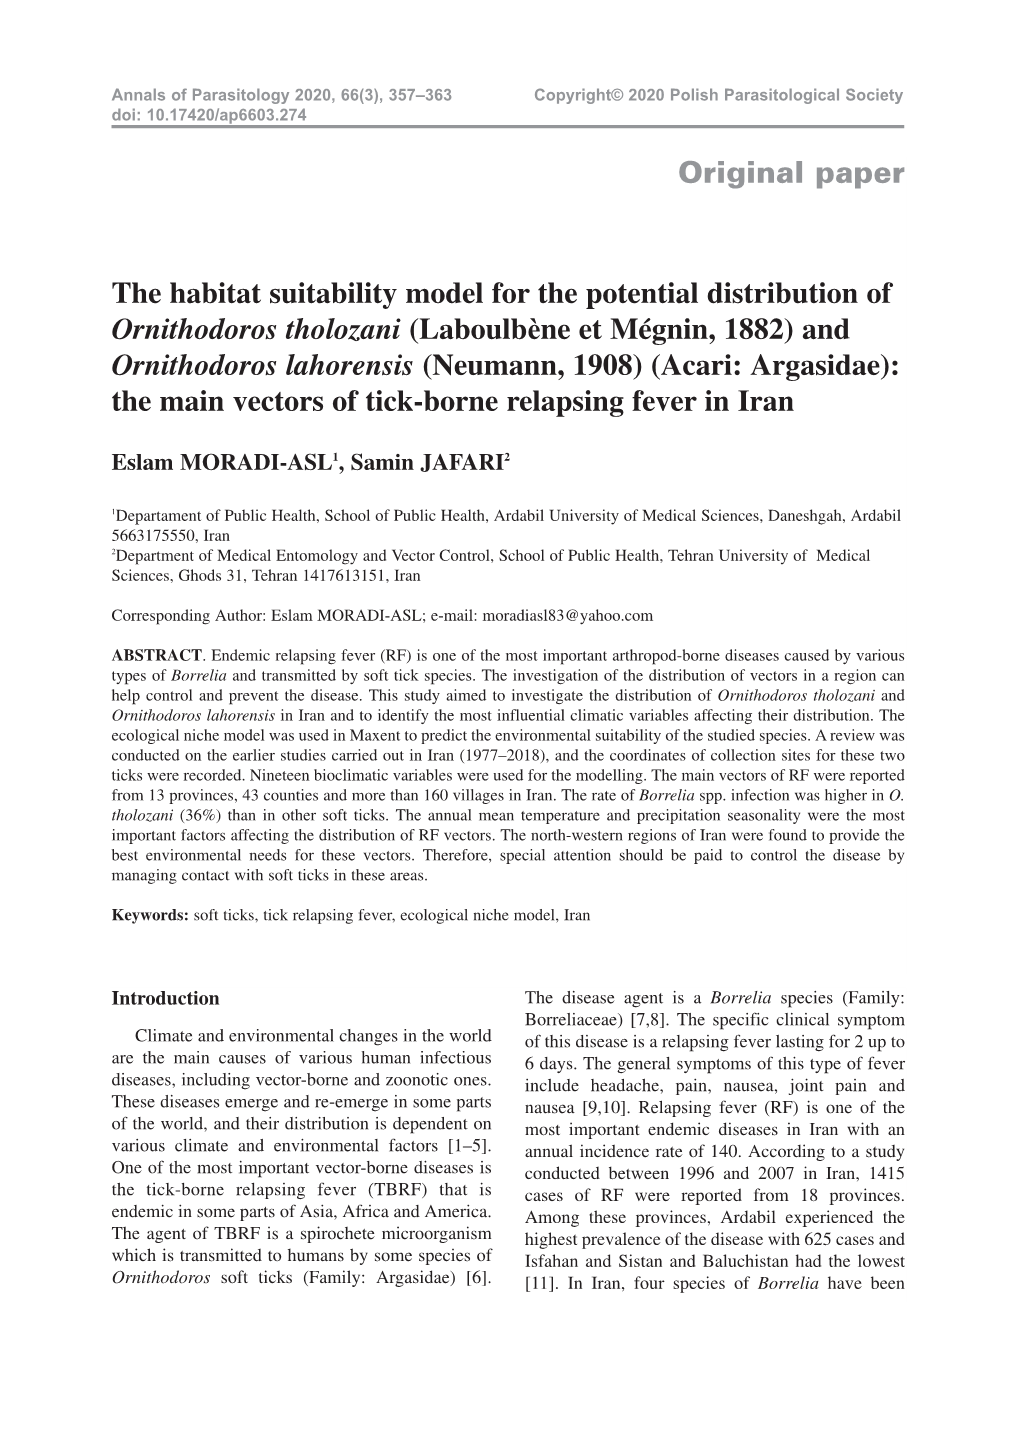 Original Paper the Habitat Suitability Model for the Potential Distribution